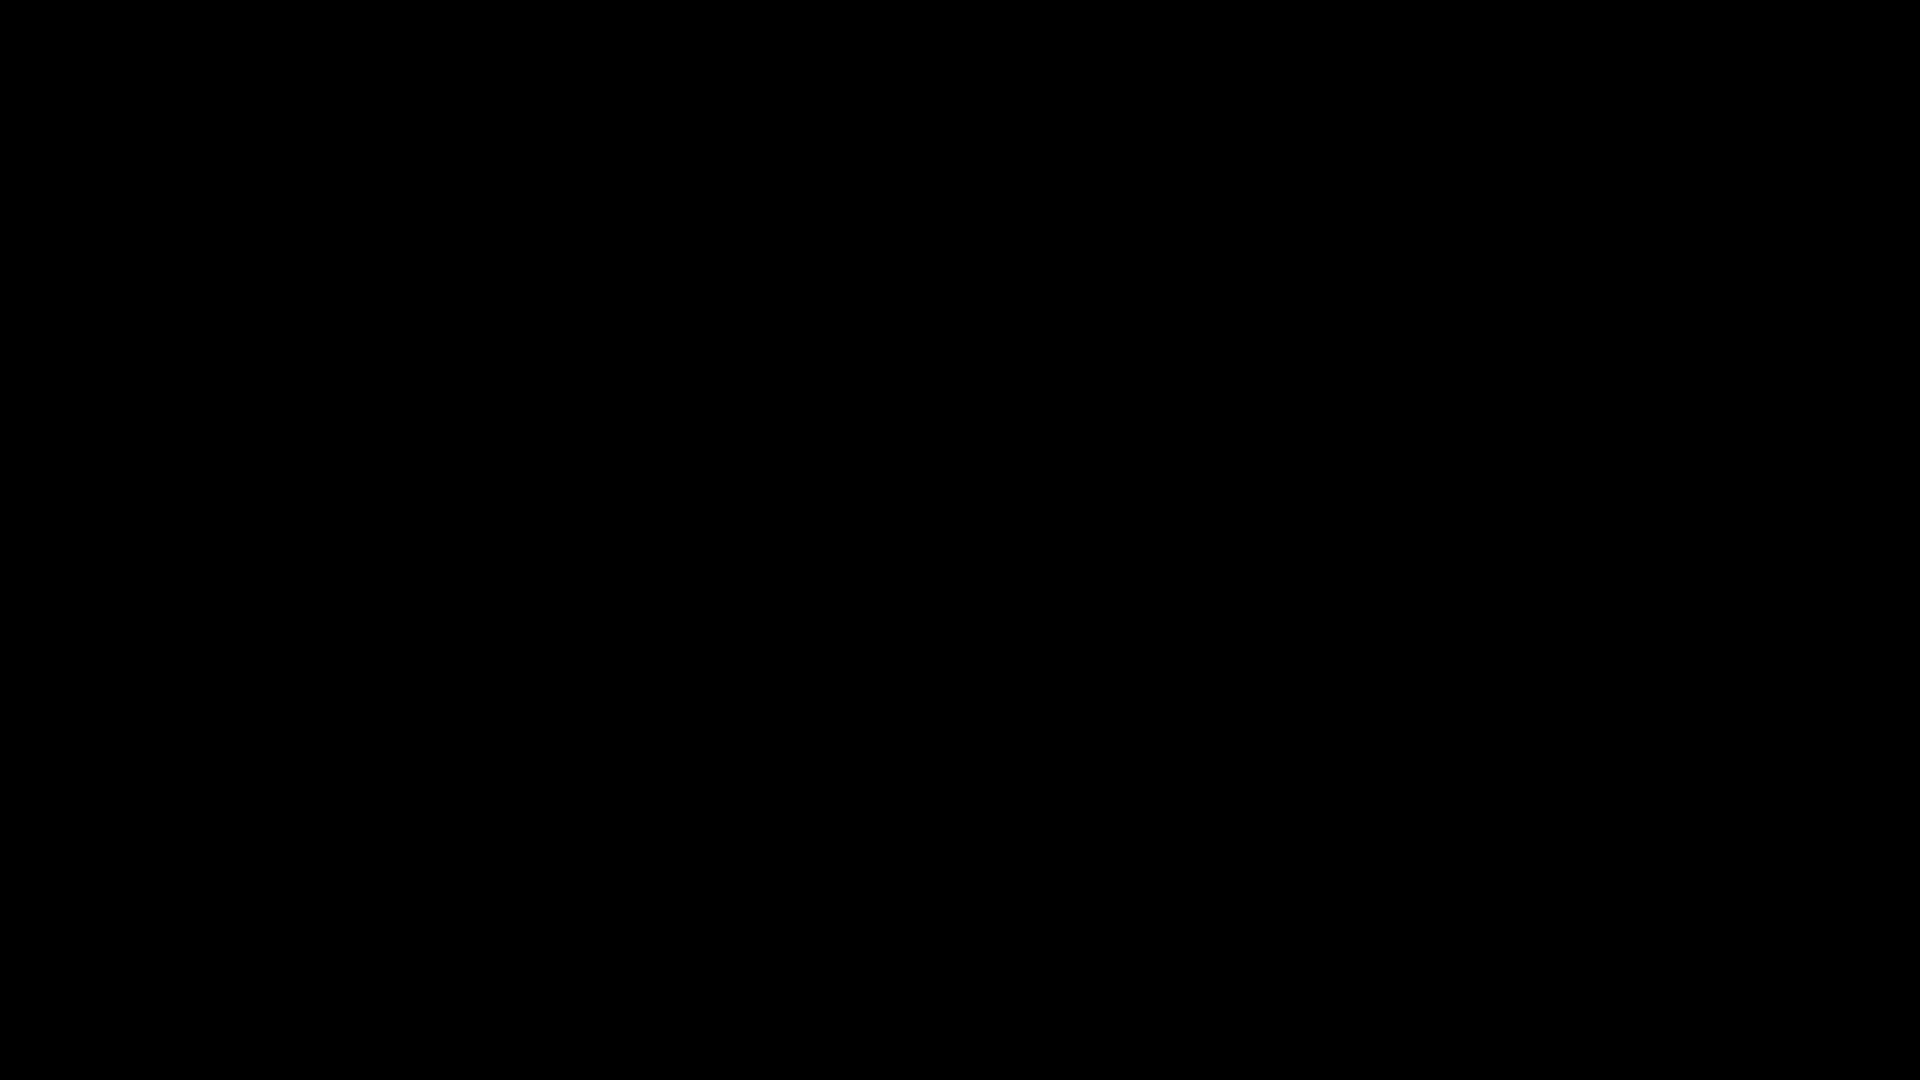 The SIPVicious mascot in ASCII art